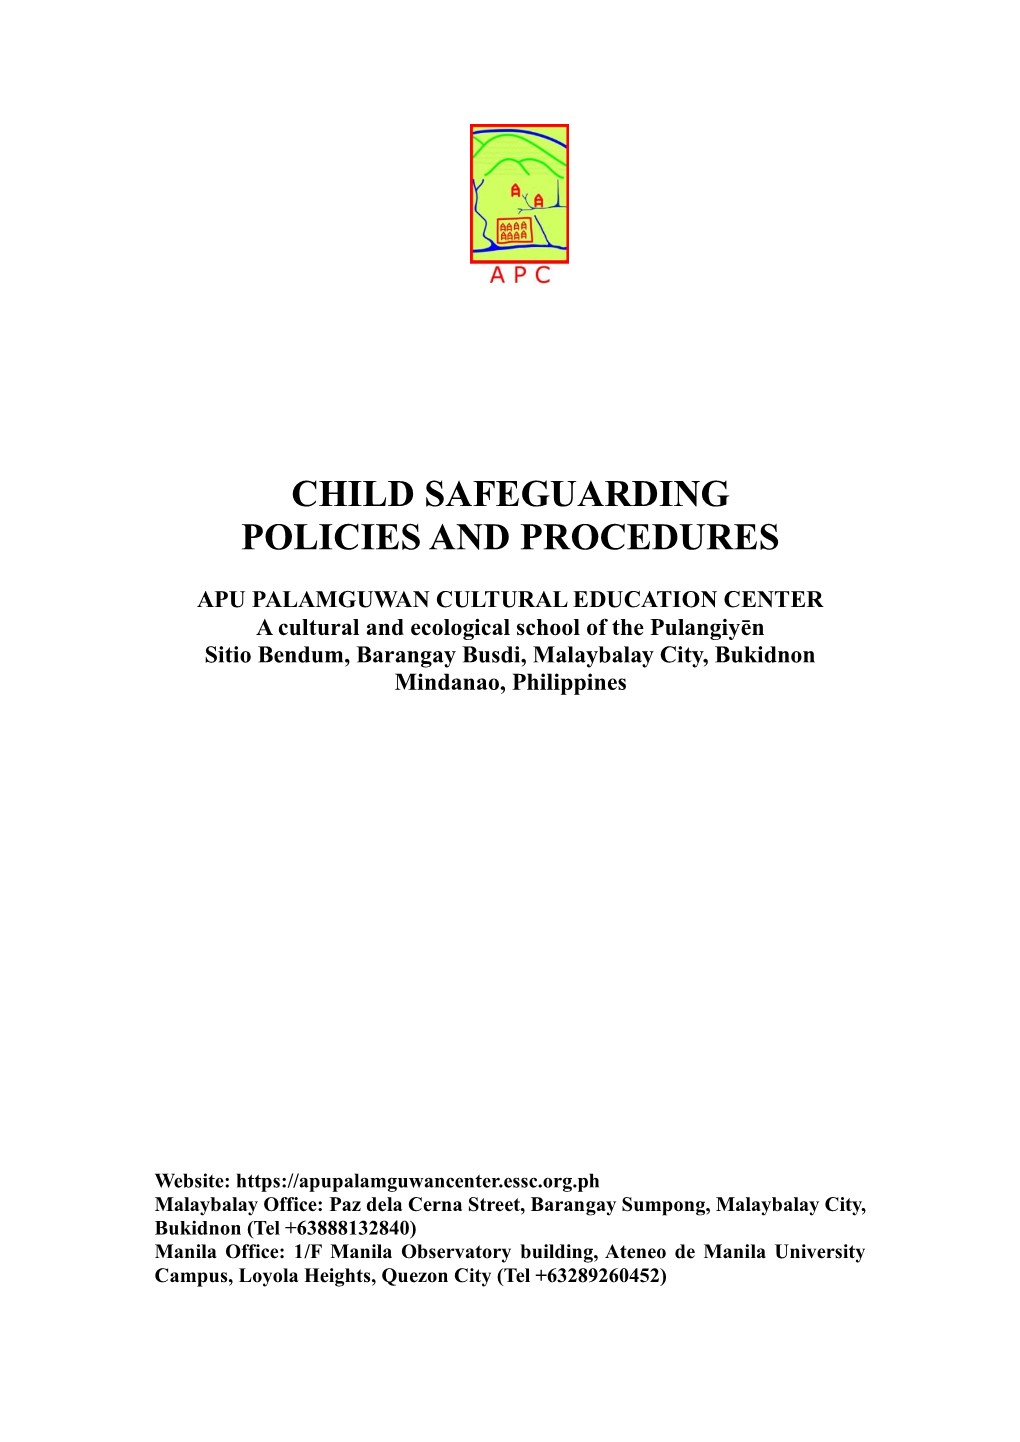 Child Safeguarding Policies and Procedures